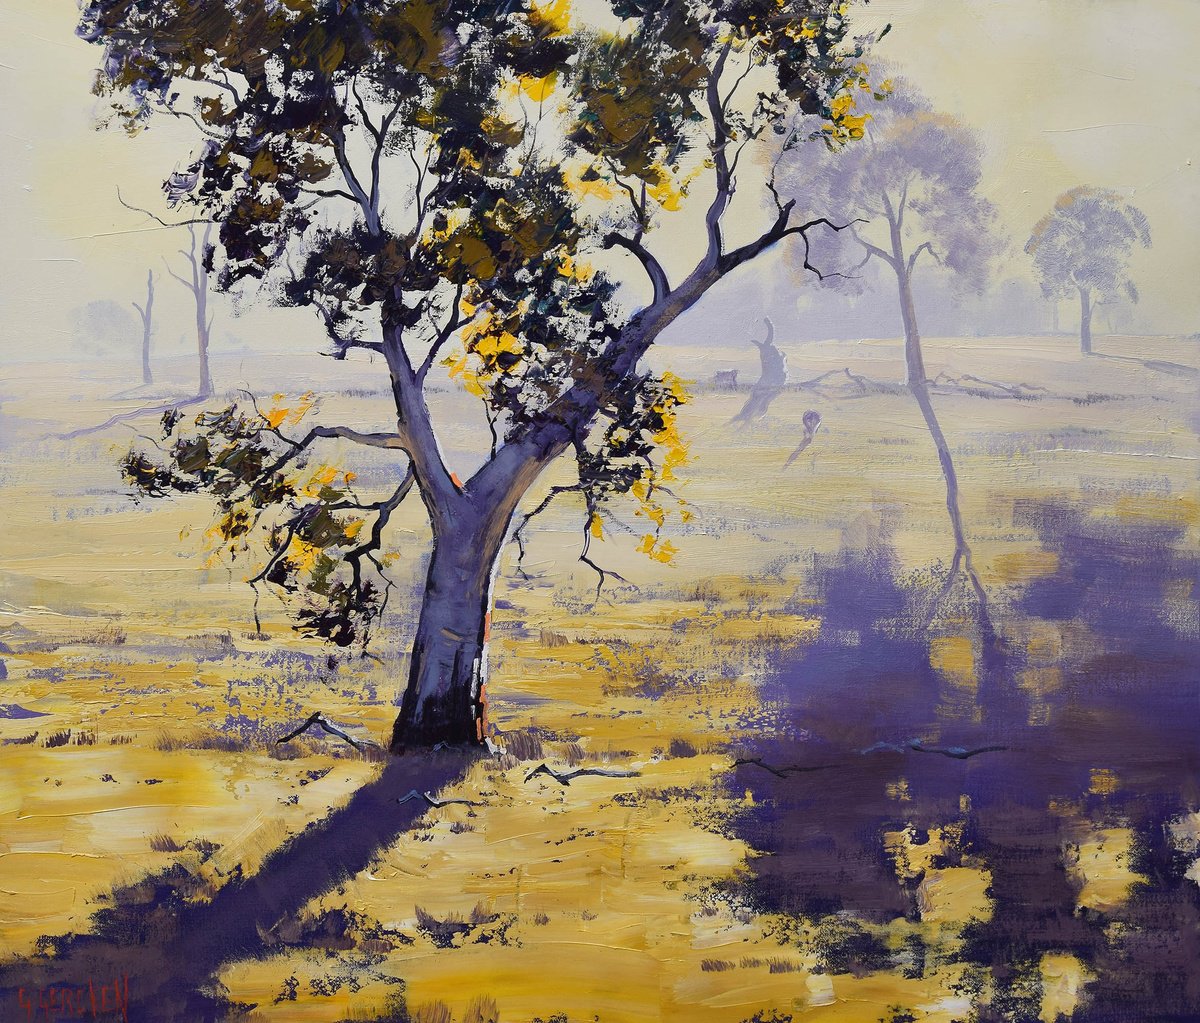 Australian gum tree Eucalyptus tree large landscape by Graham Gercken